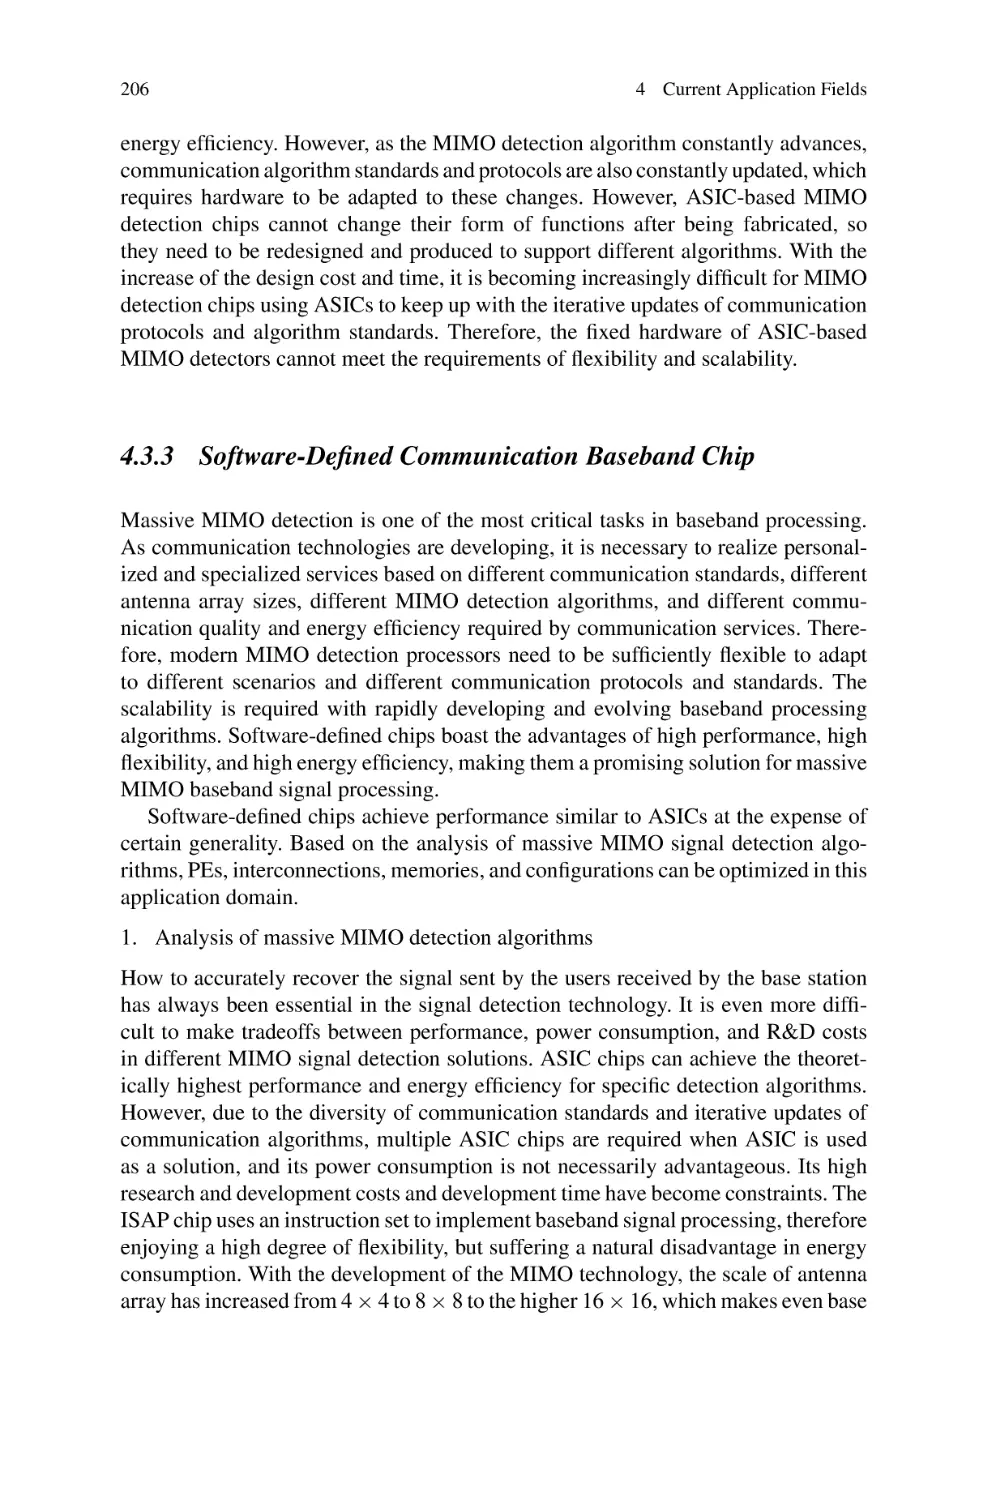 4.3.3 Software-Defined Communication Baseband Chip